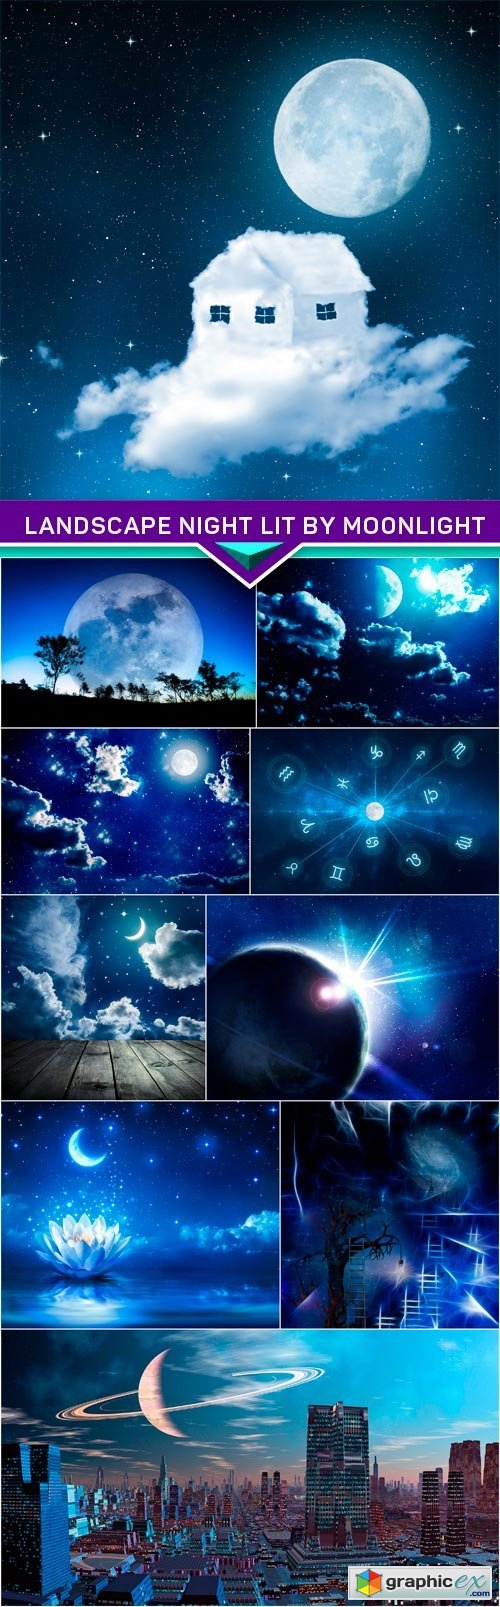 Landscape night lit by moonlight 10X JPEG